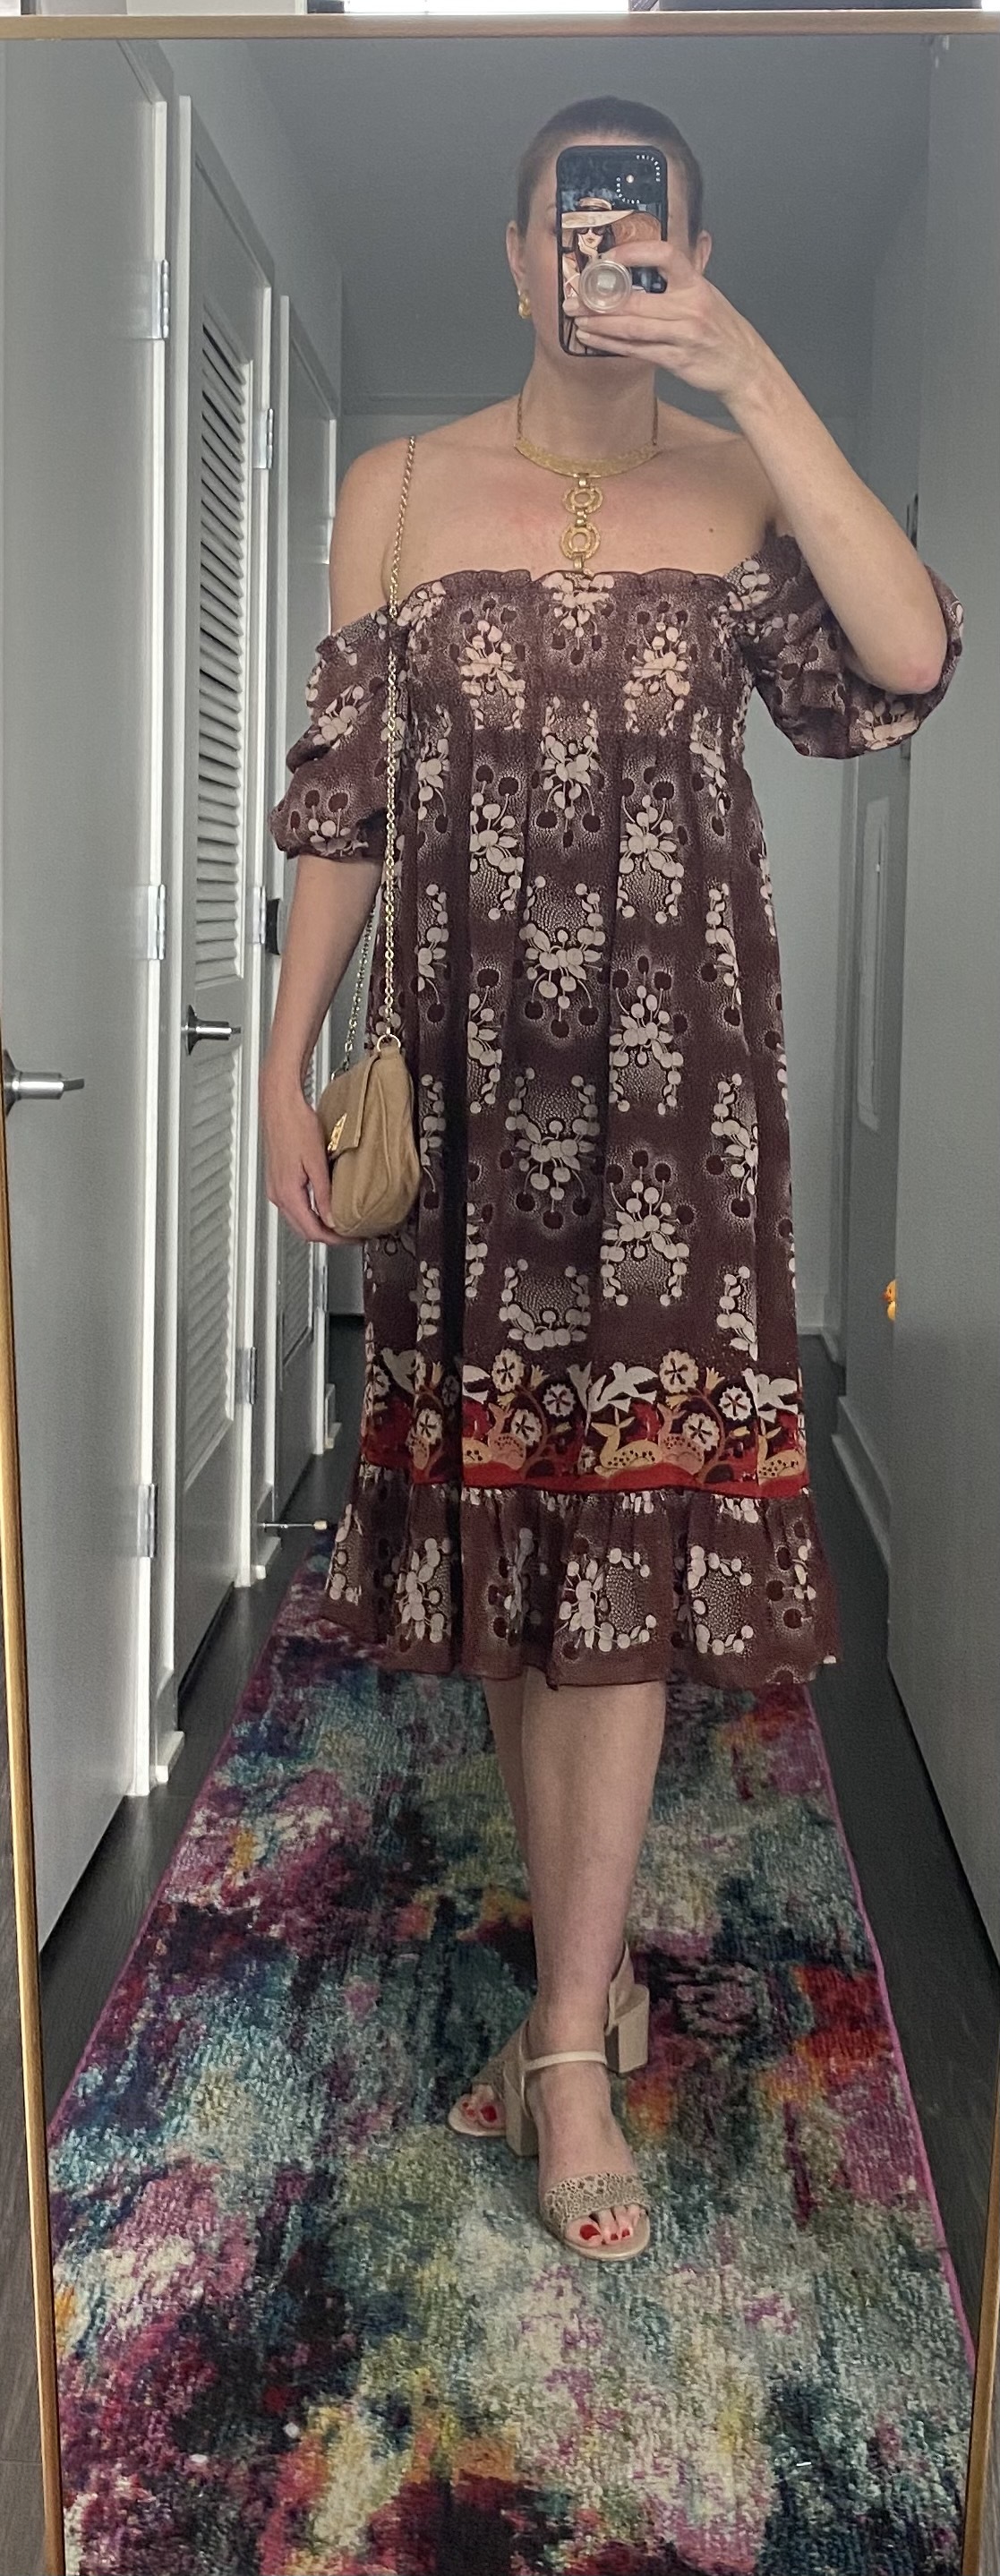 Woman wearing printed off-the-shoulder dress with handbag on shoulder